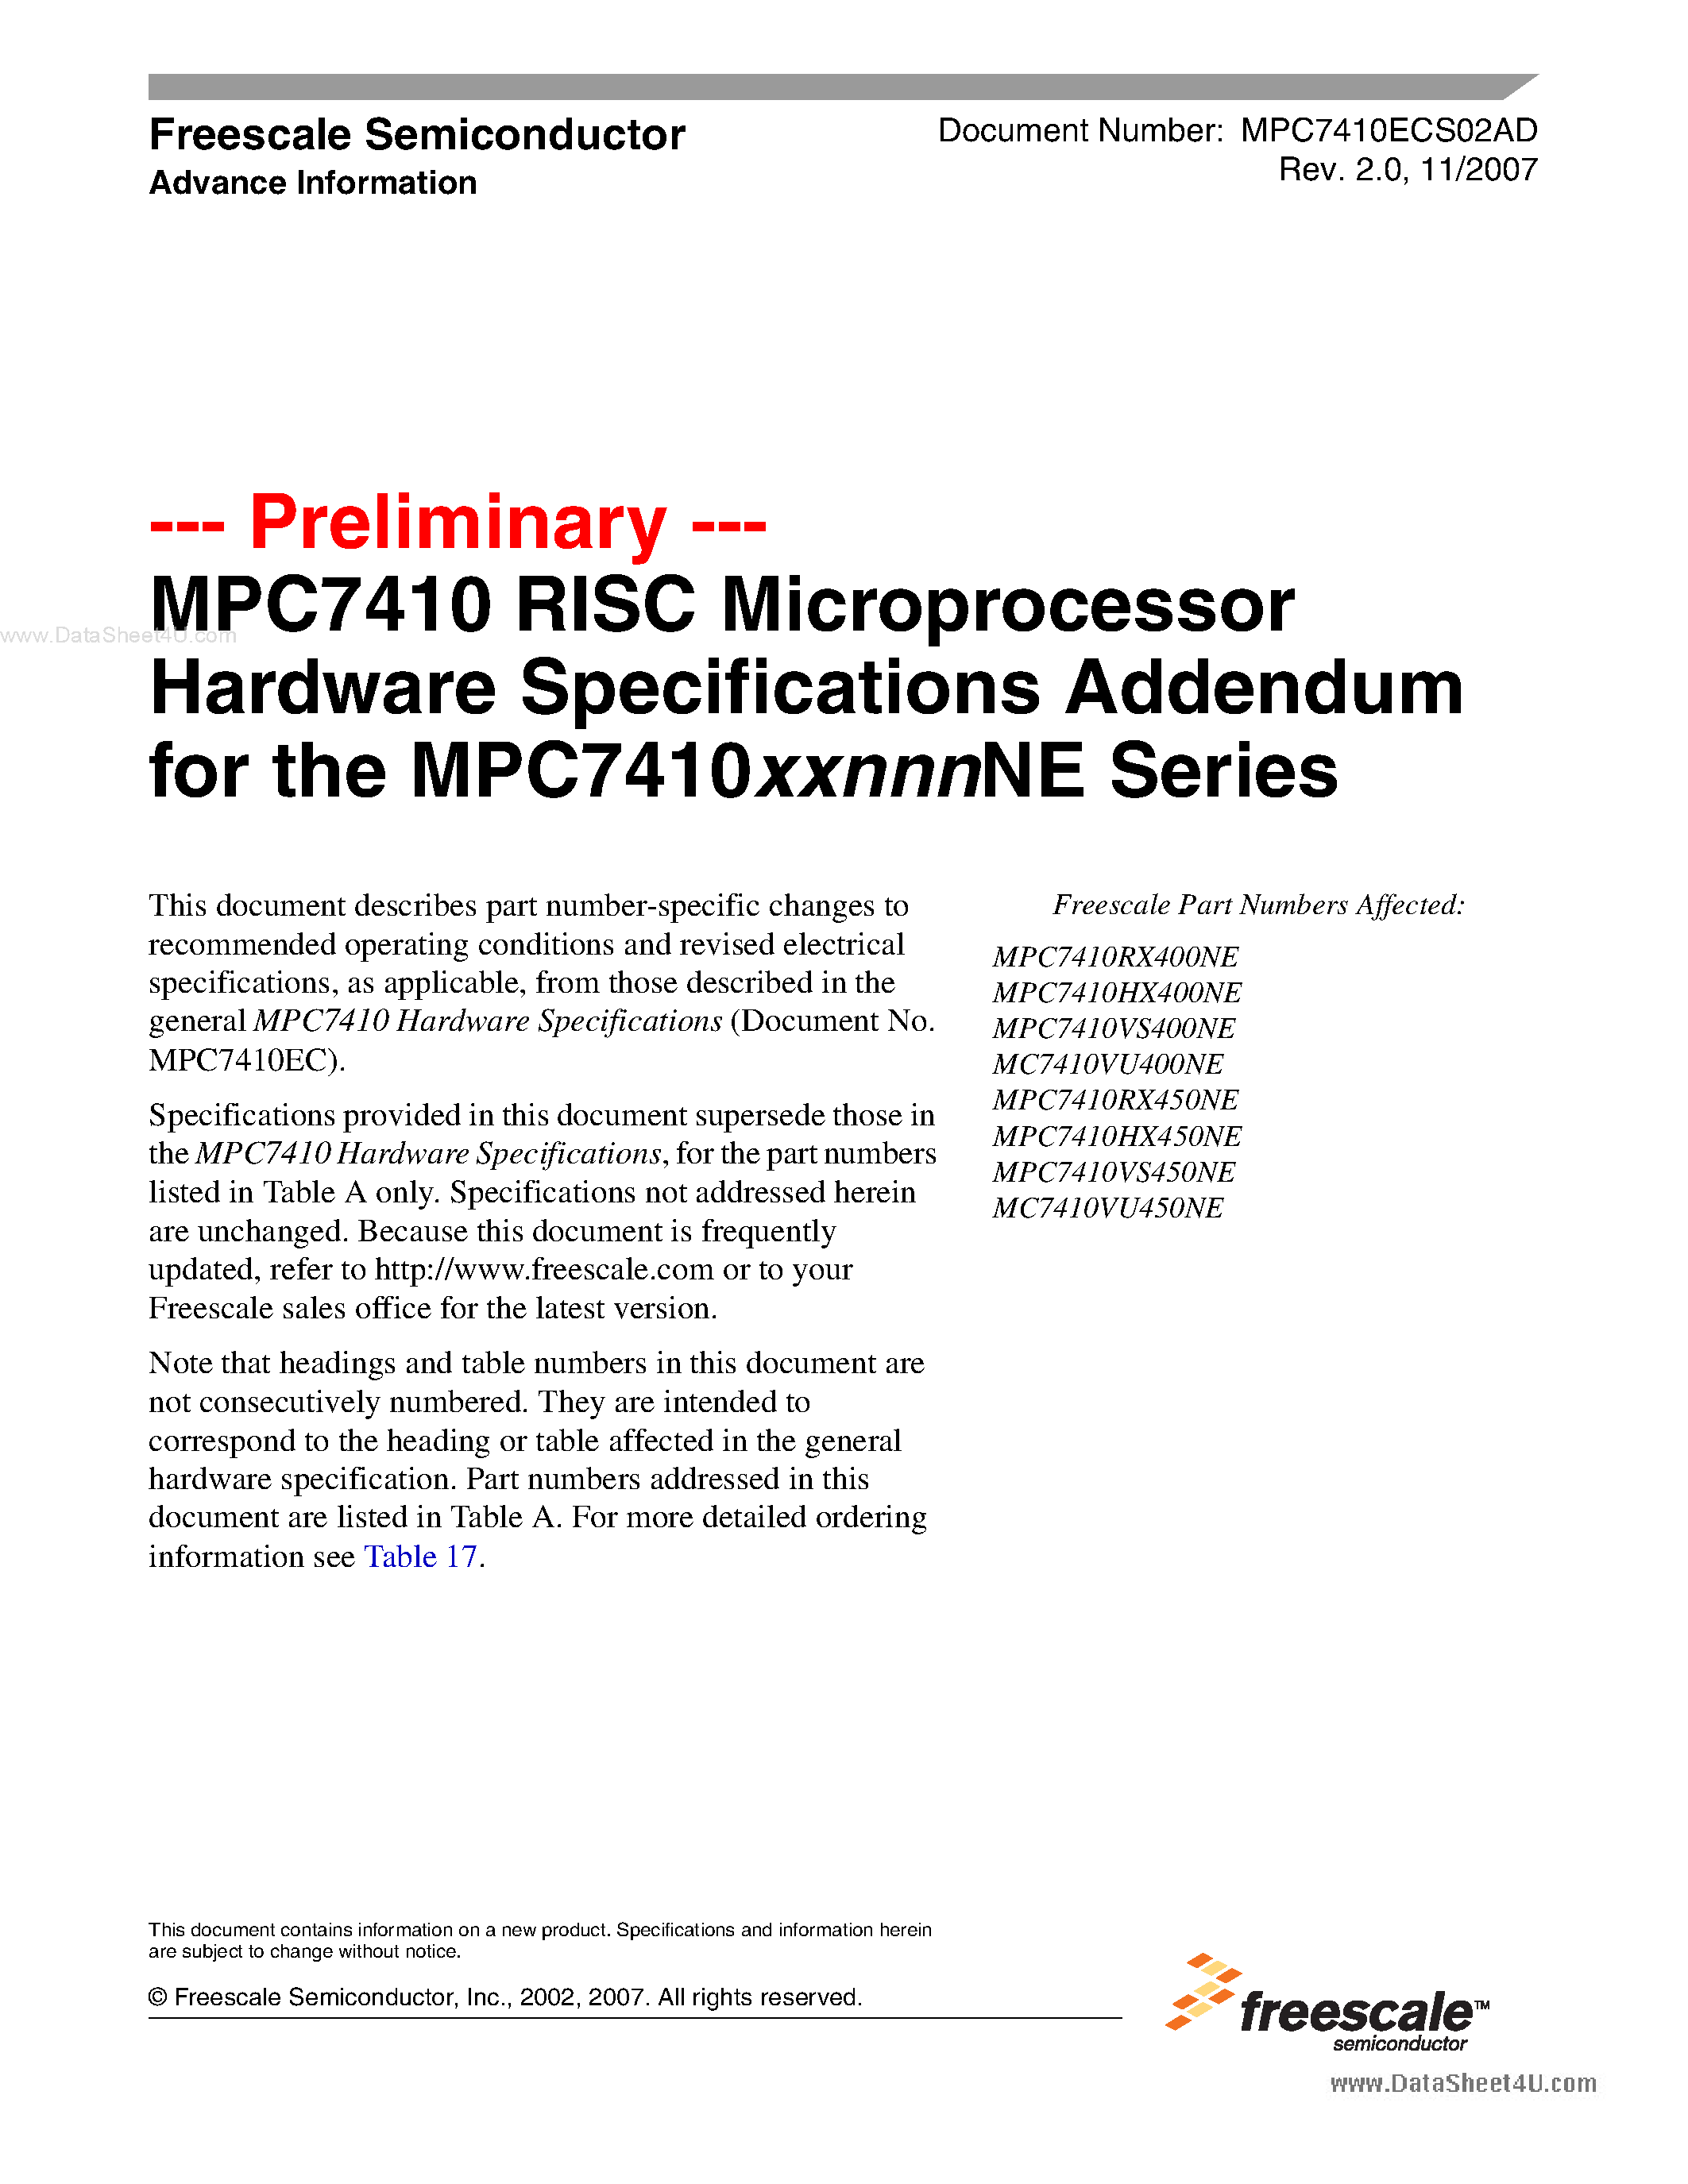 Даташит MC7410 - RISC Microprocessor Hardware Specifications Addendum страница 1